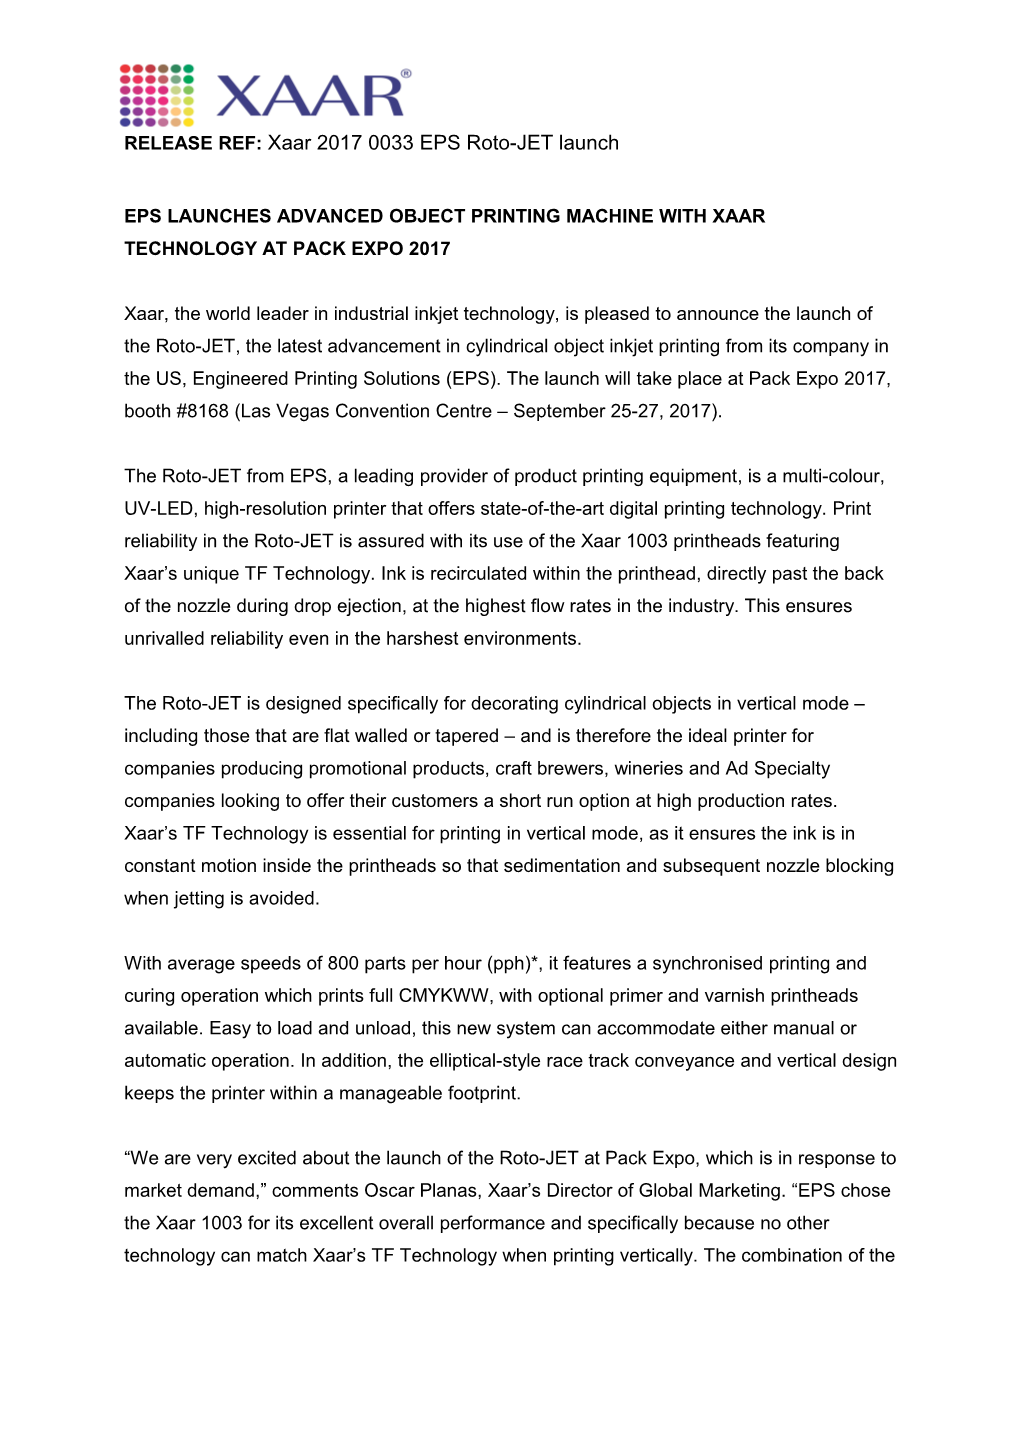 RELEASE REF:Xaar 2017 0033 EPS Roto-JET Launch